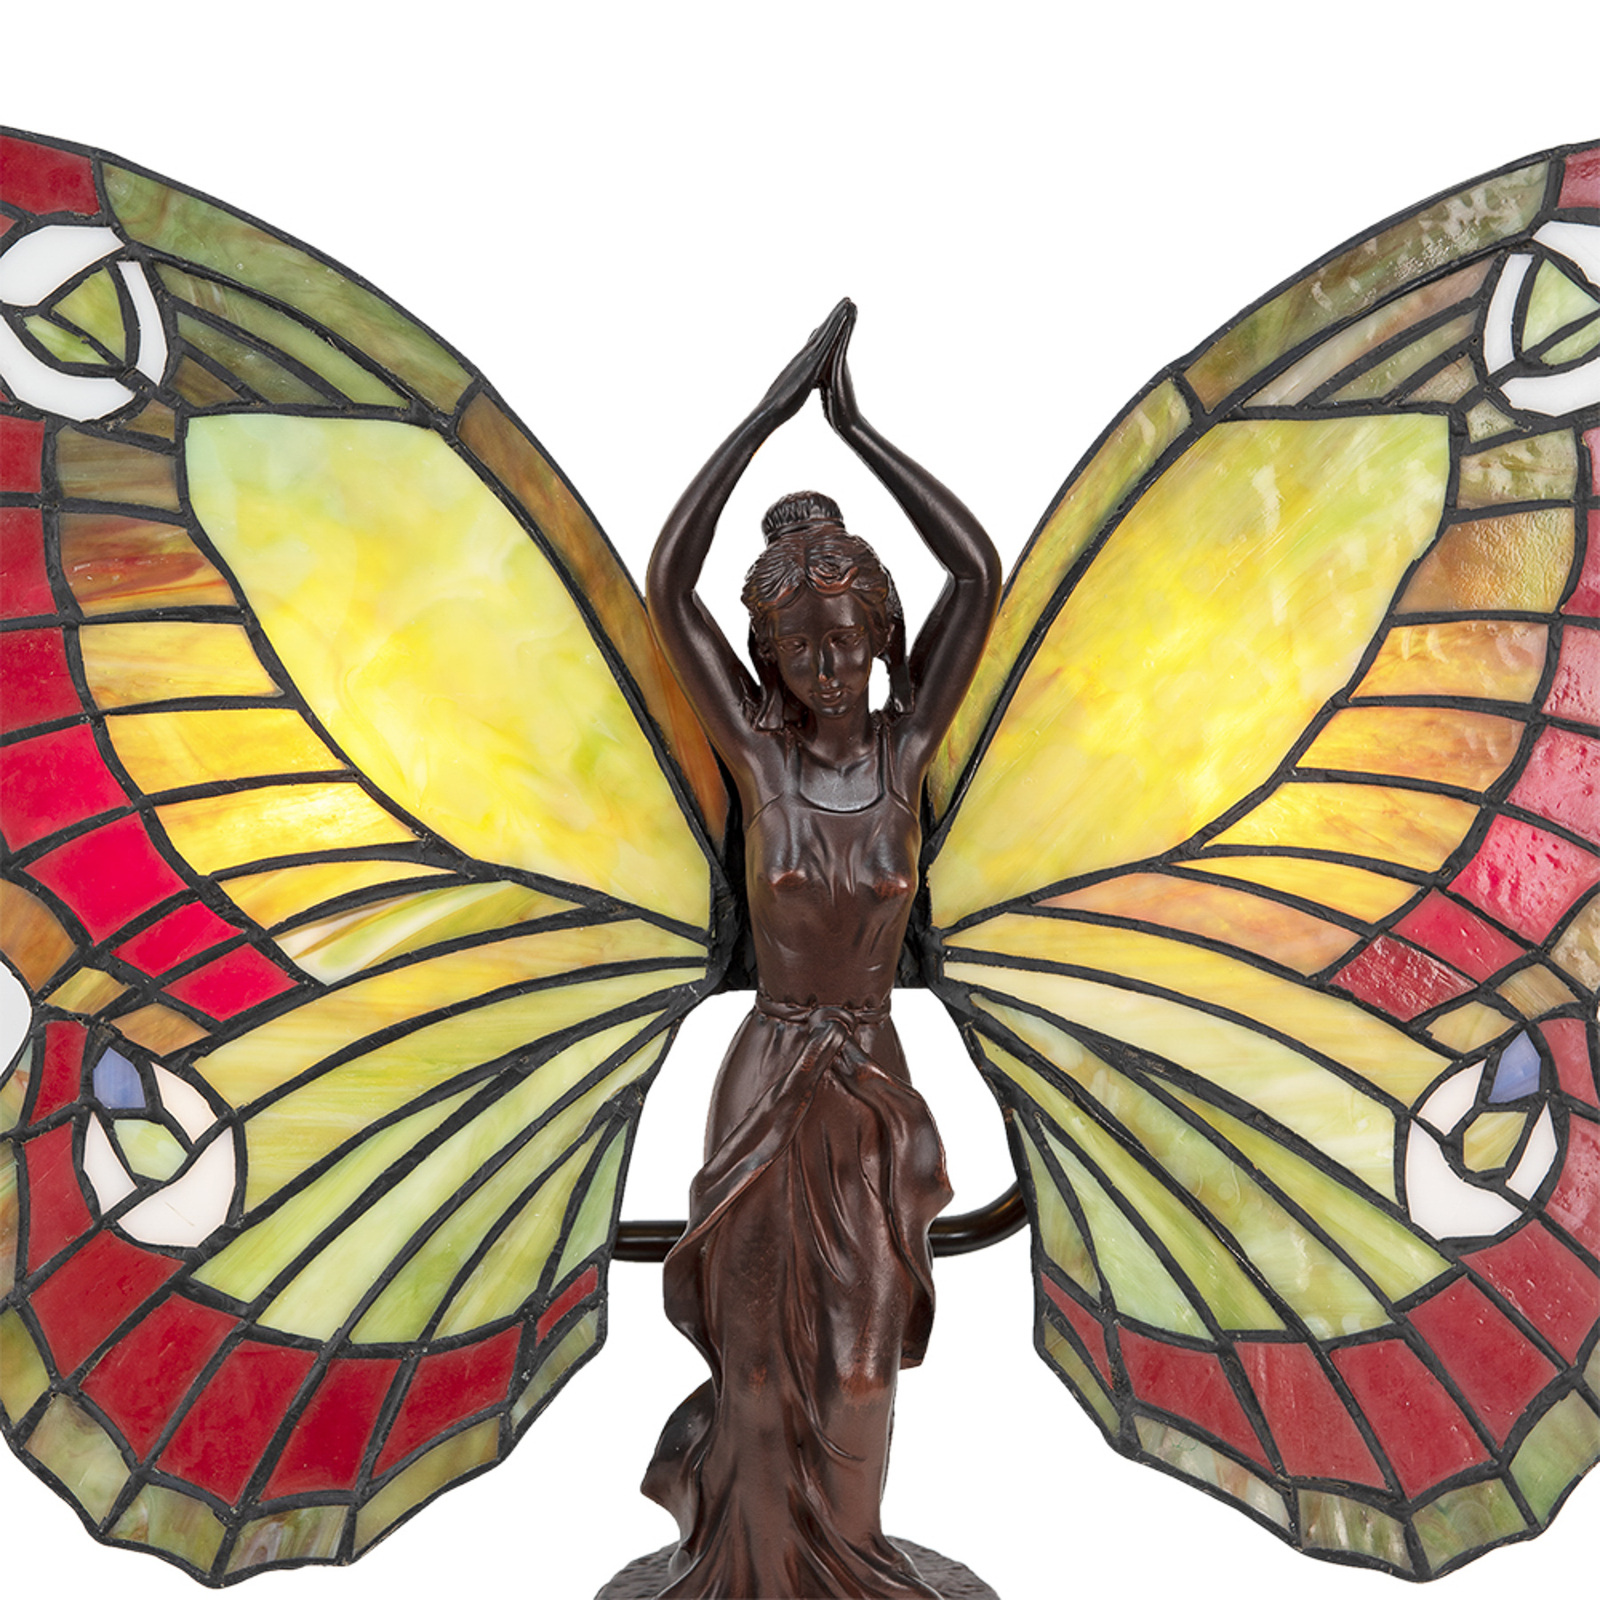 Candeeiro de mesa 5LL-6085 Butterfly em estilo Tiffany